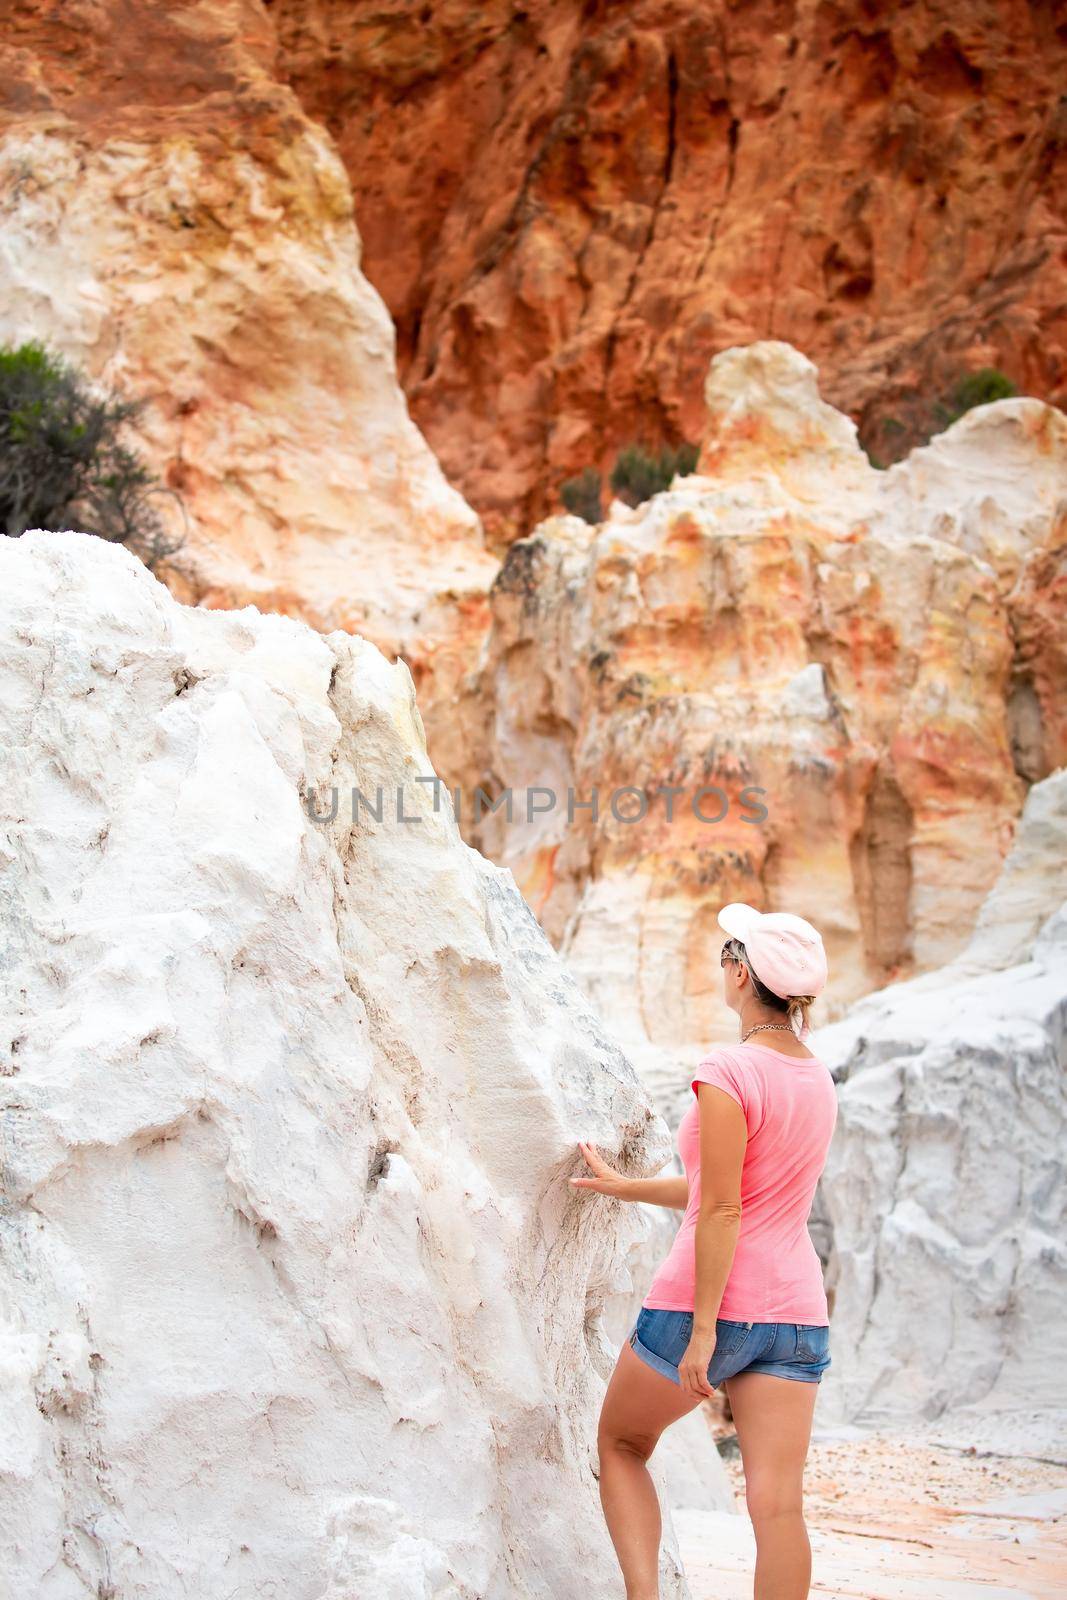 Traveller exploring the cliffs of Ben Boyd Australia by lovleah